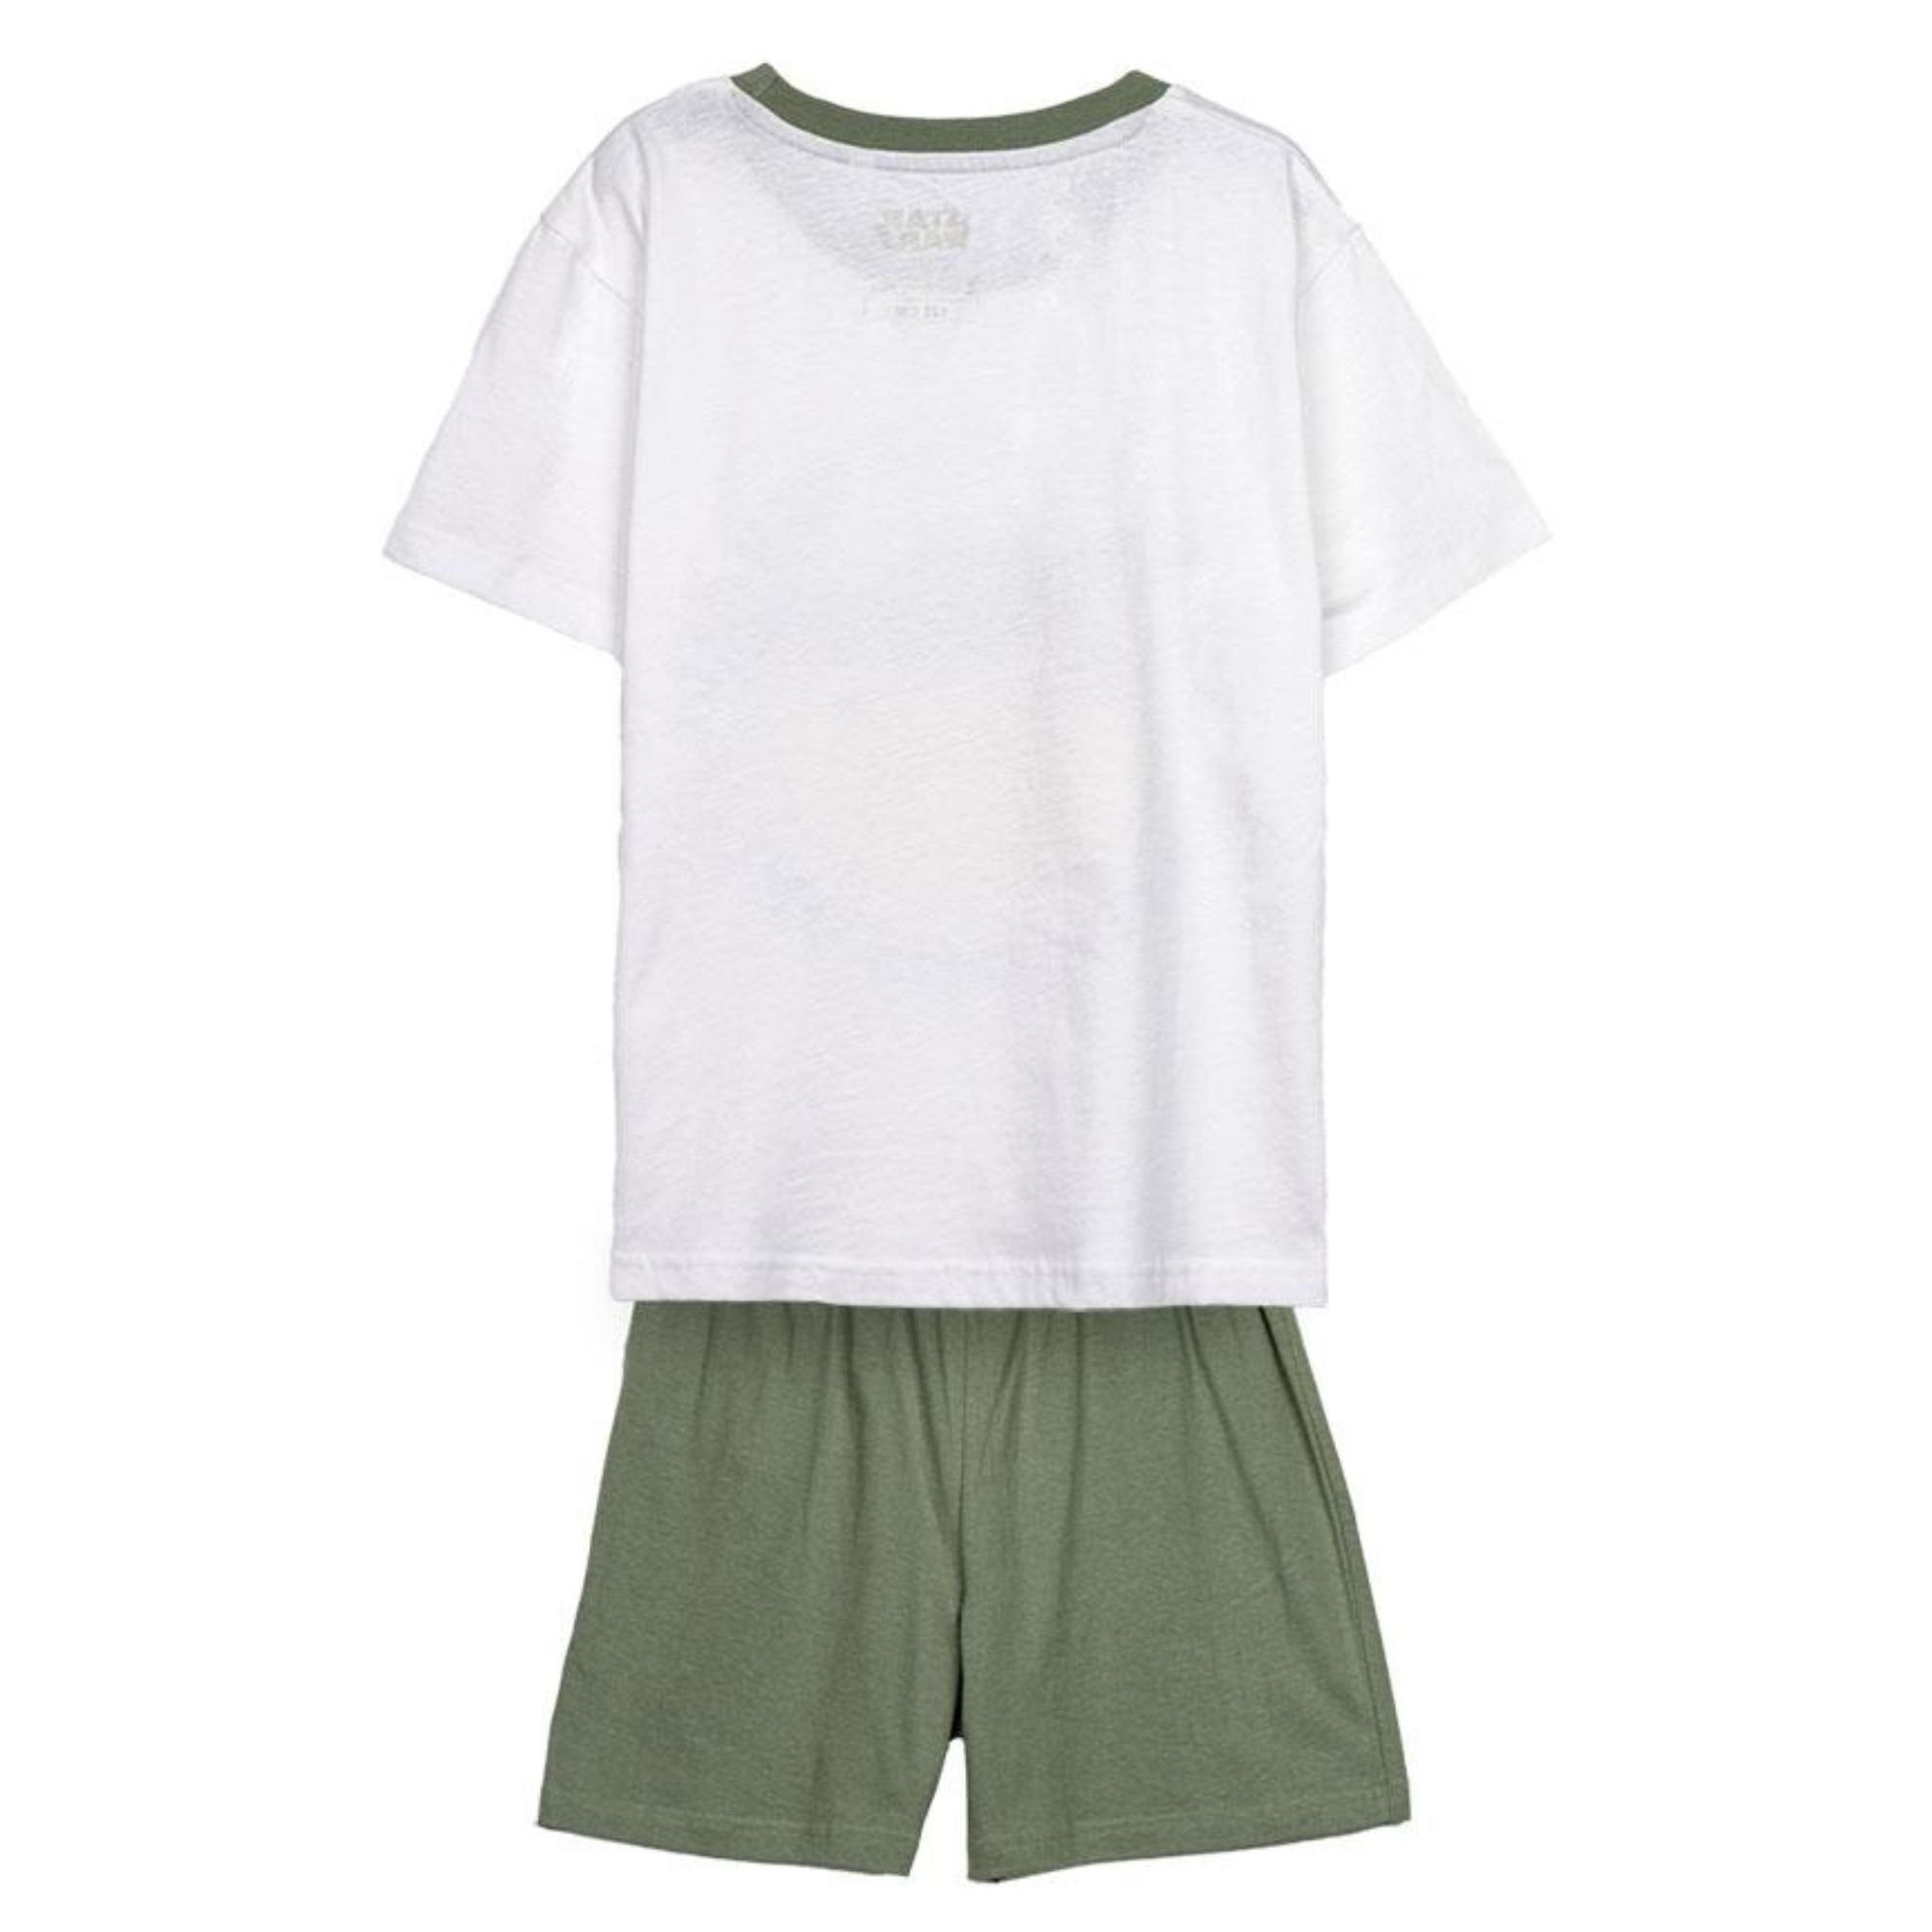 tlg) Pyjama - Star Jungen GROGU Kinder kurz (2 116-158 Set Schlafanzug Weiß-Grün Gr. Wars cm Shorty